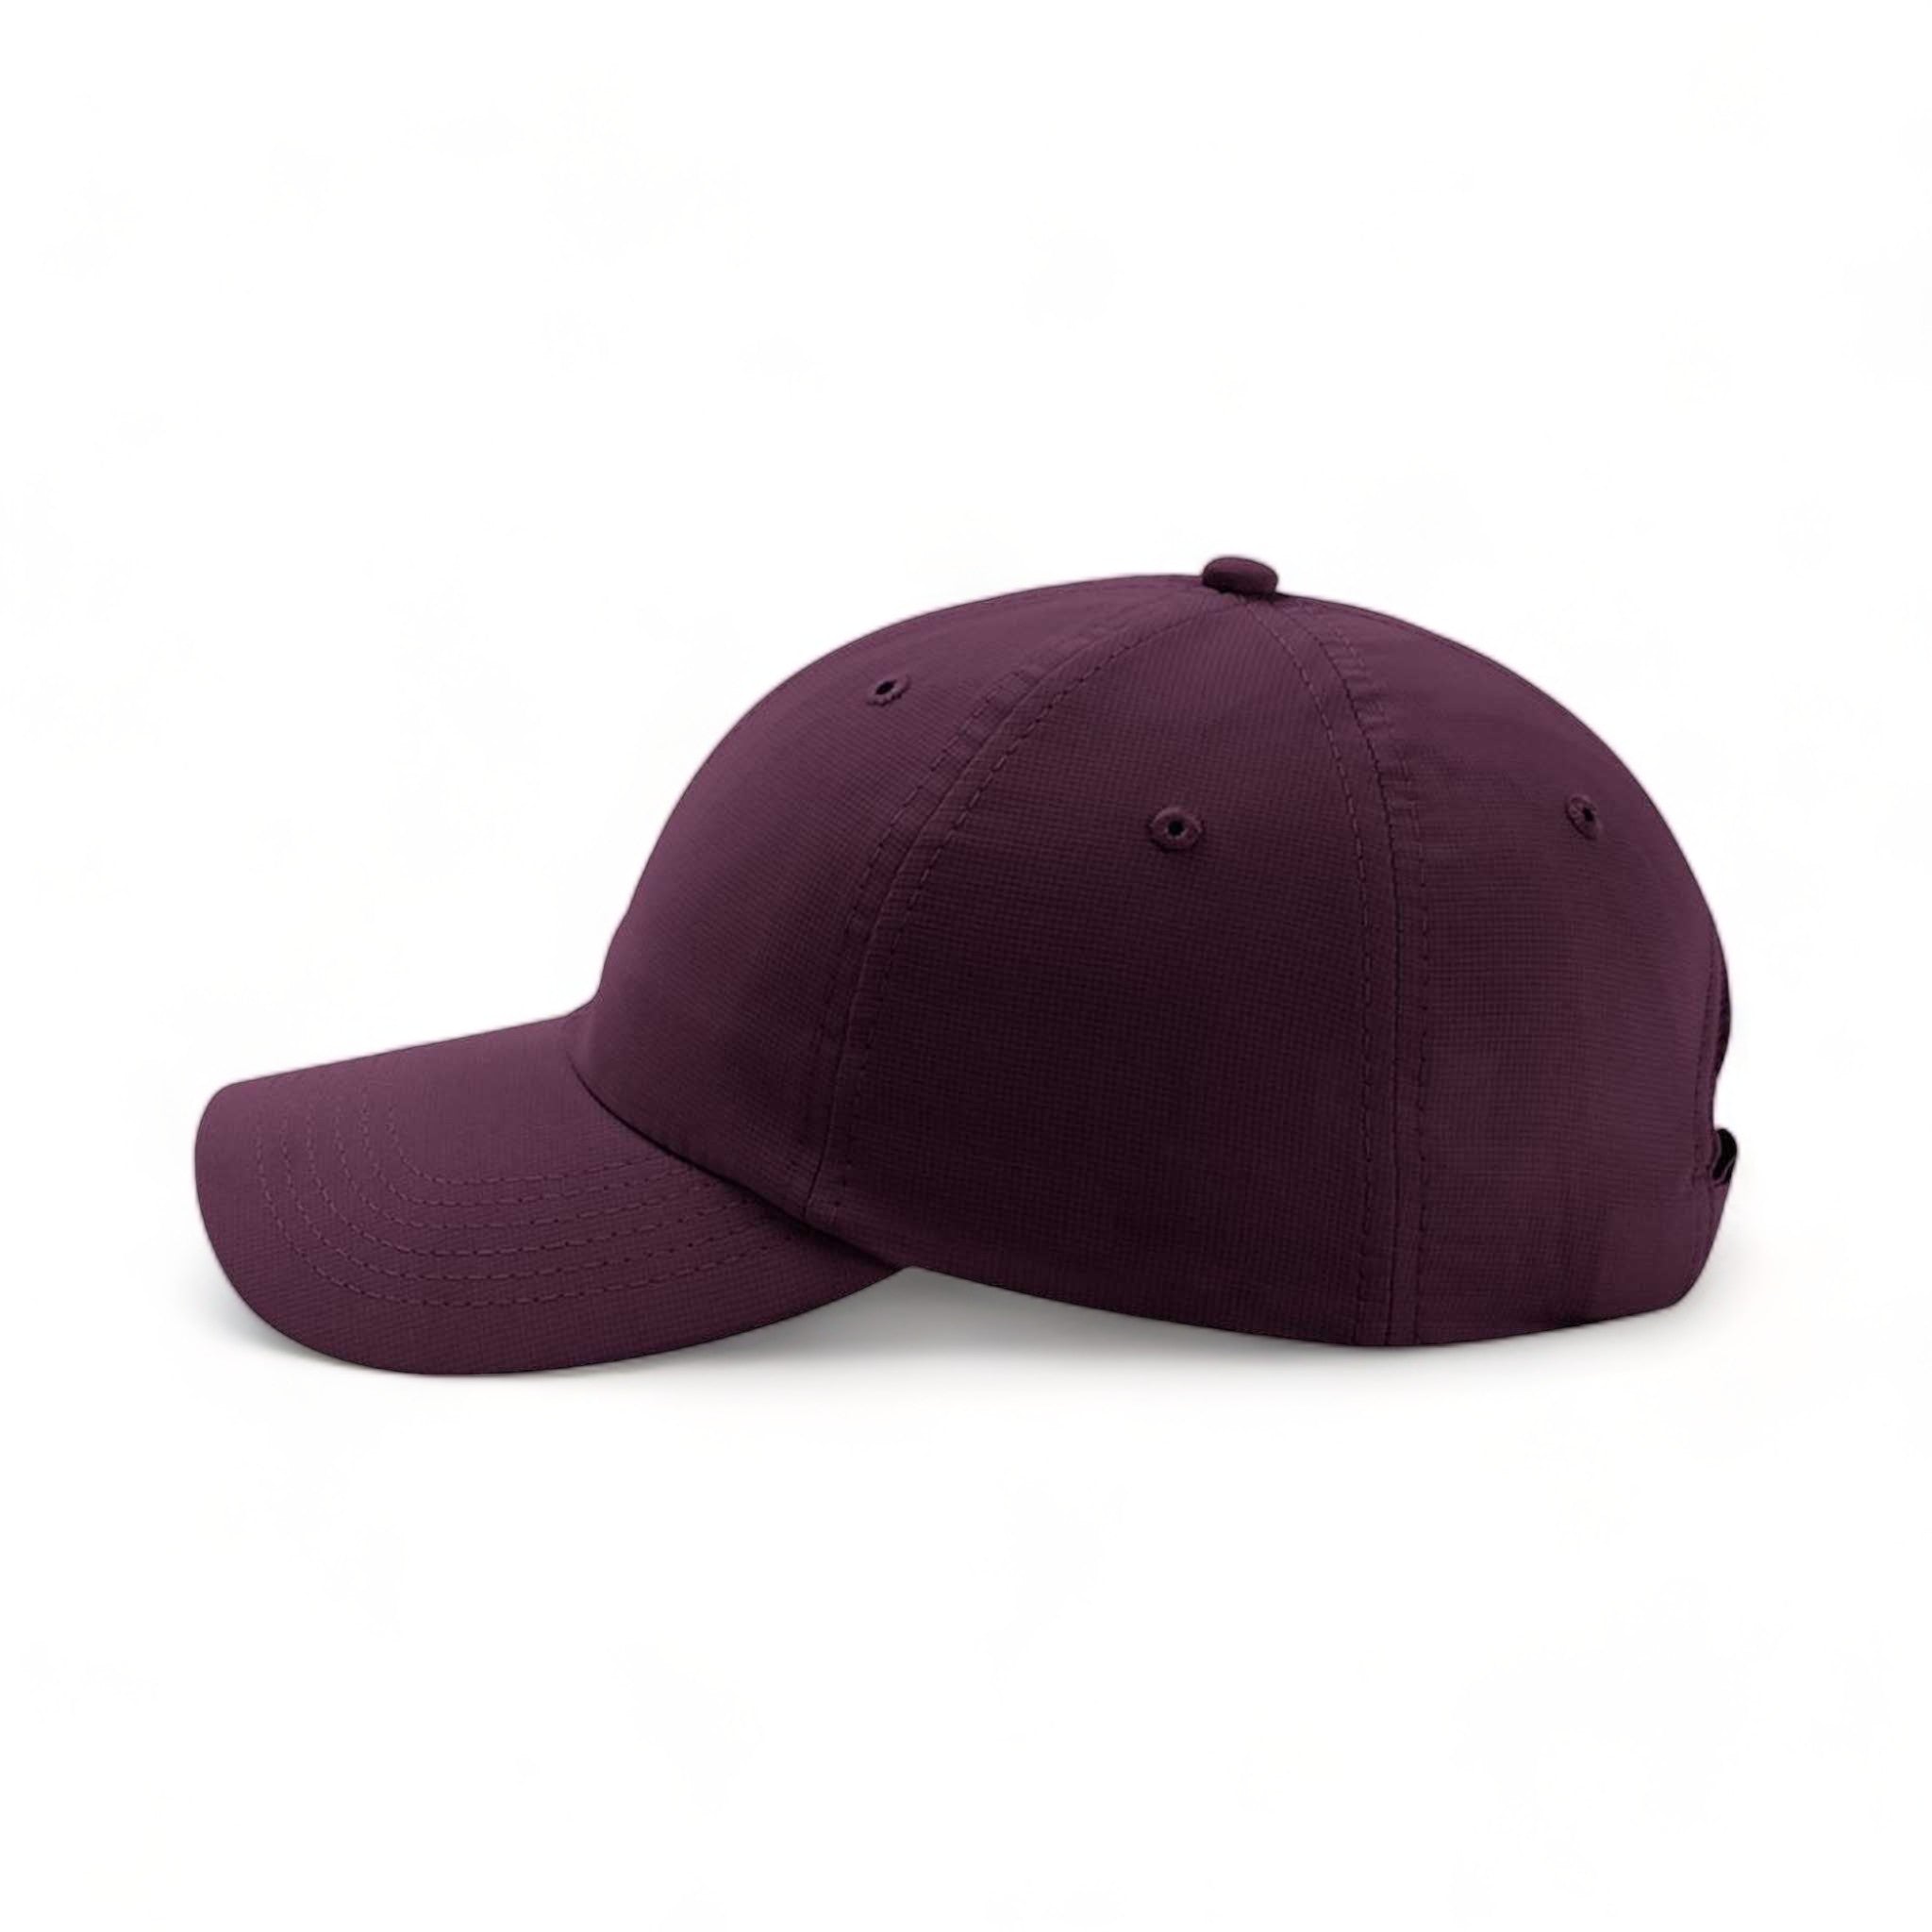 Side view of Imperial X210P custom hat in aubergine